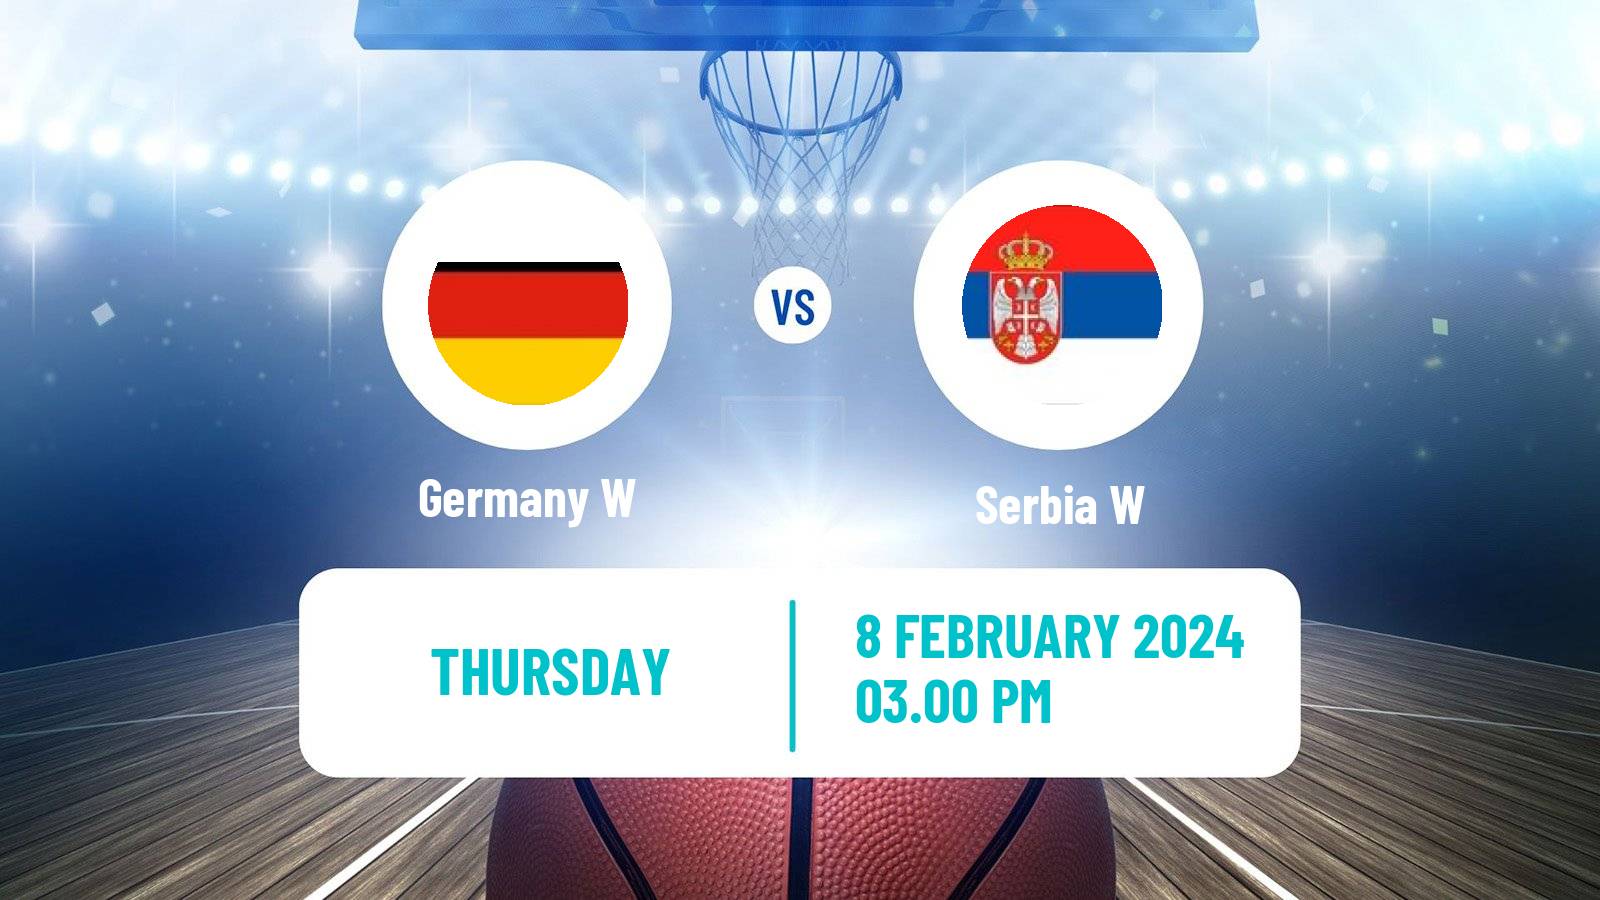 Basketball Olympic Games - Basketball Women Germany W - Serbia W